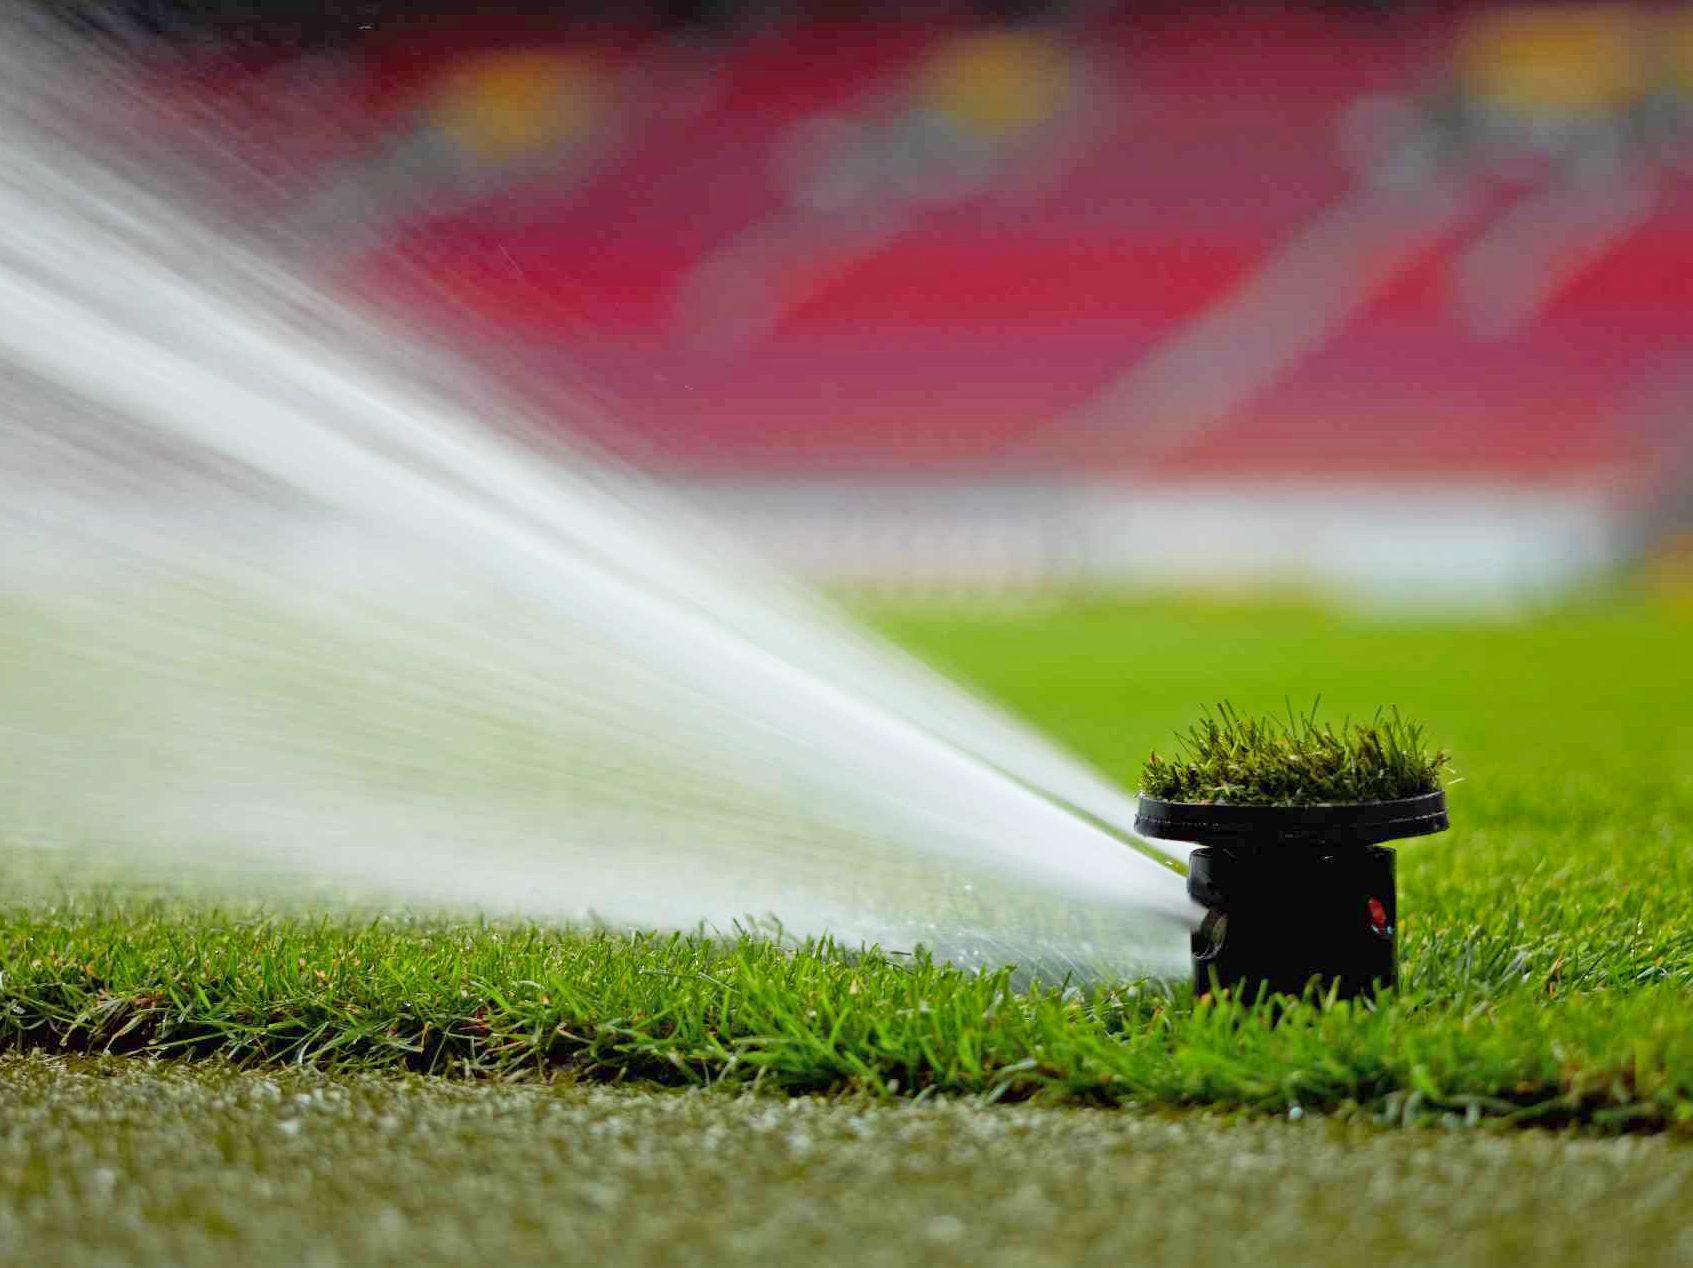 Irrigation in Football Stadium